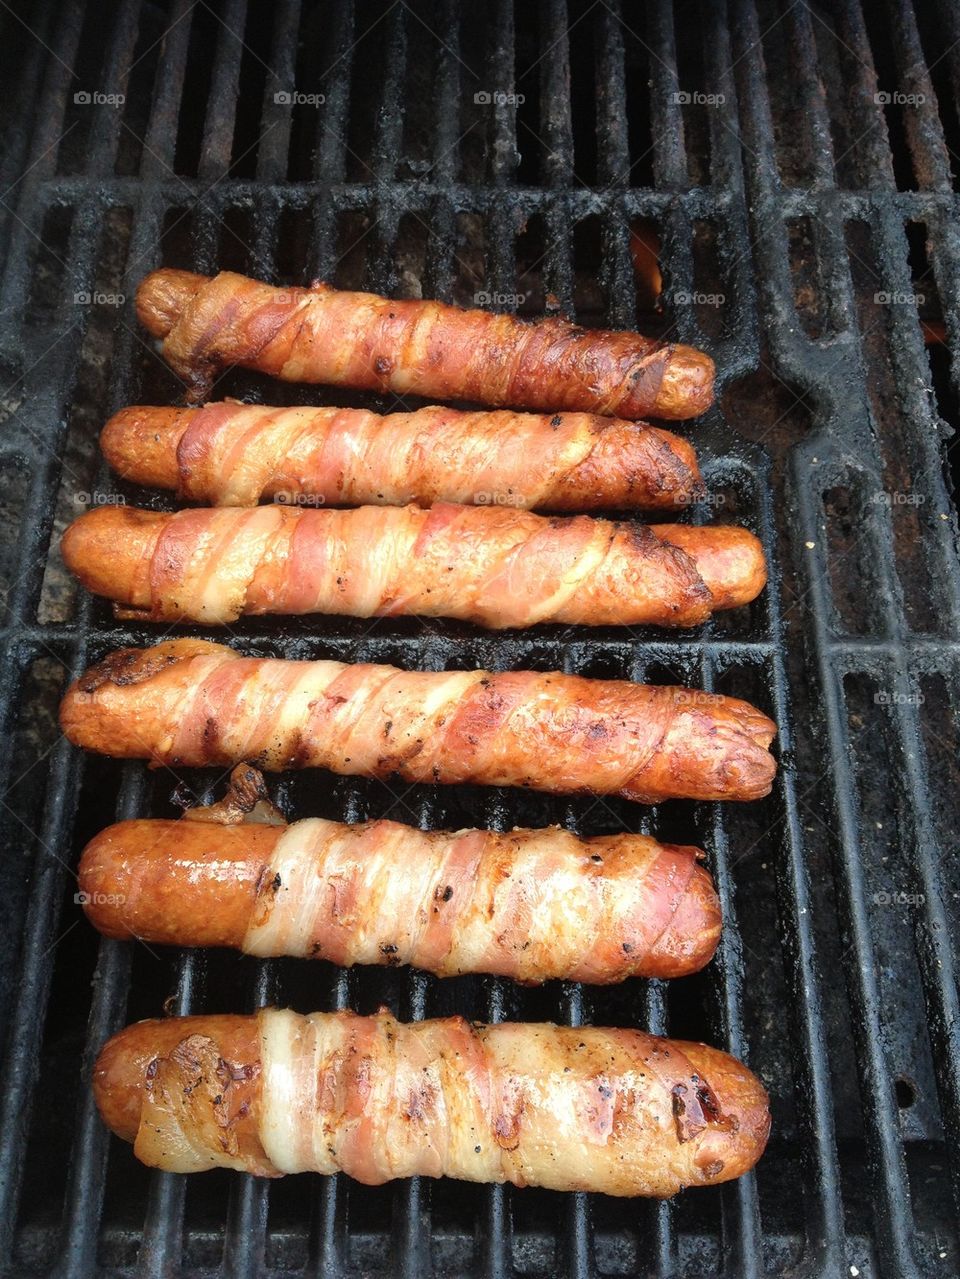 Bacon wrapped hotdogs